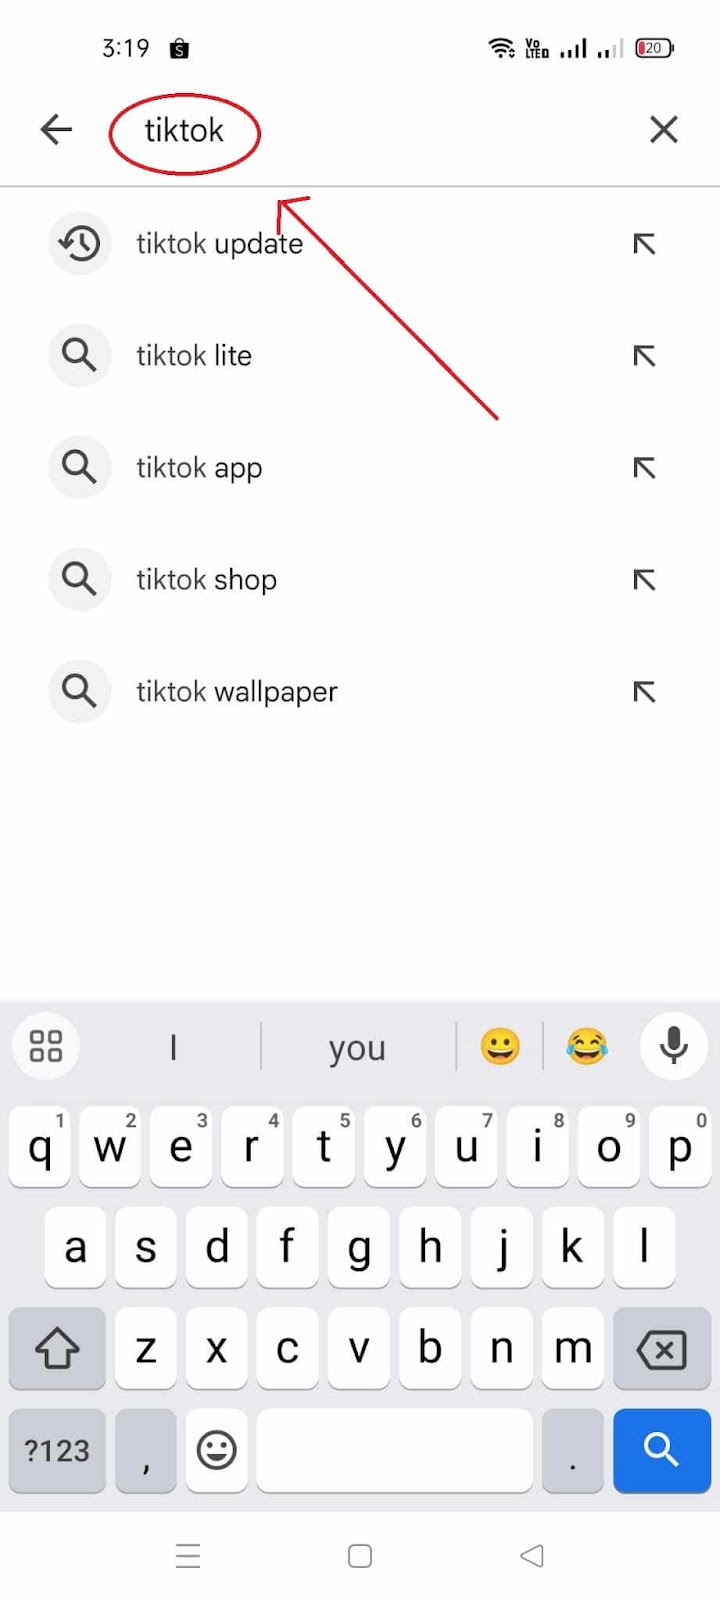 Why am I unable to follow someone on TikTok - Search TikTok